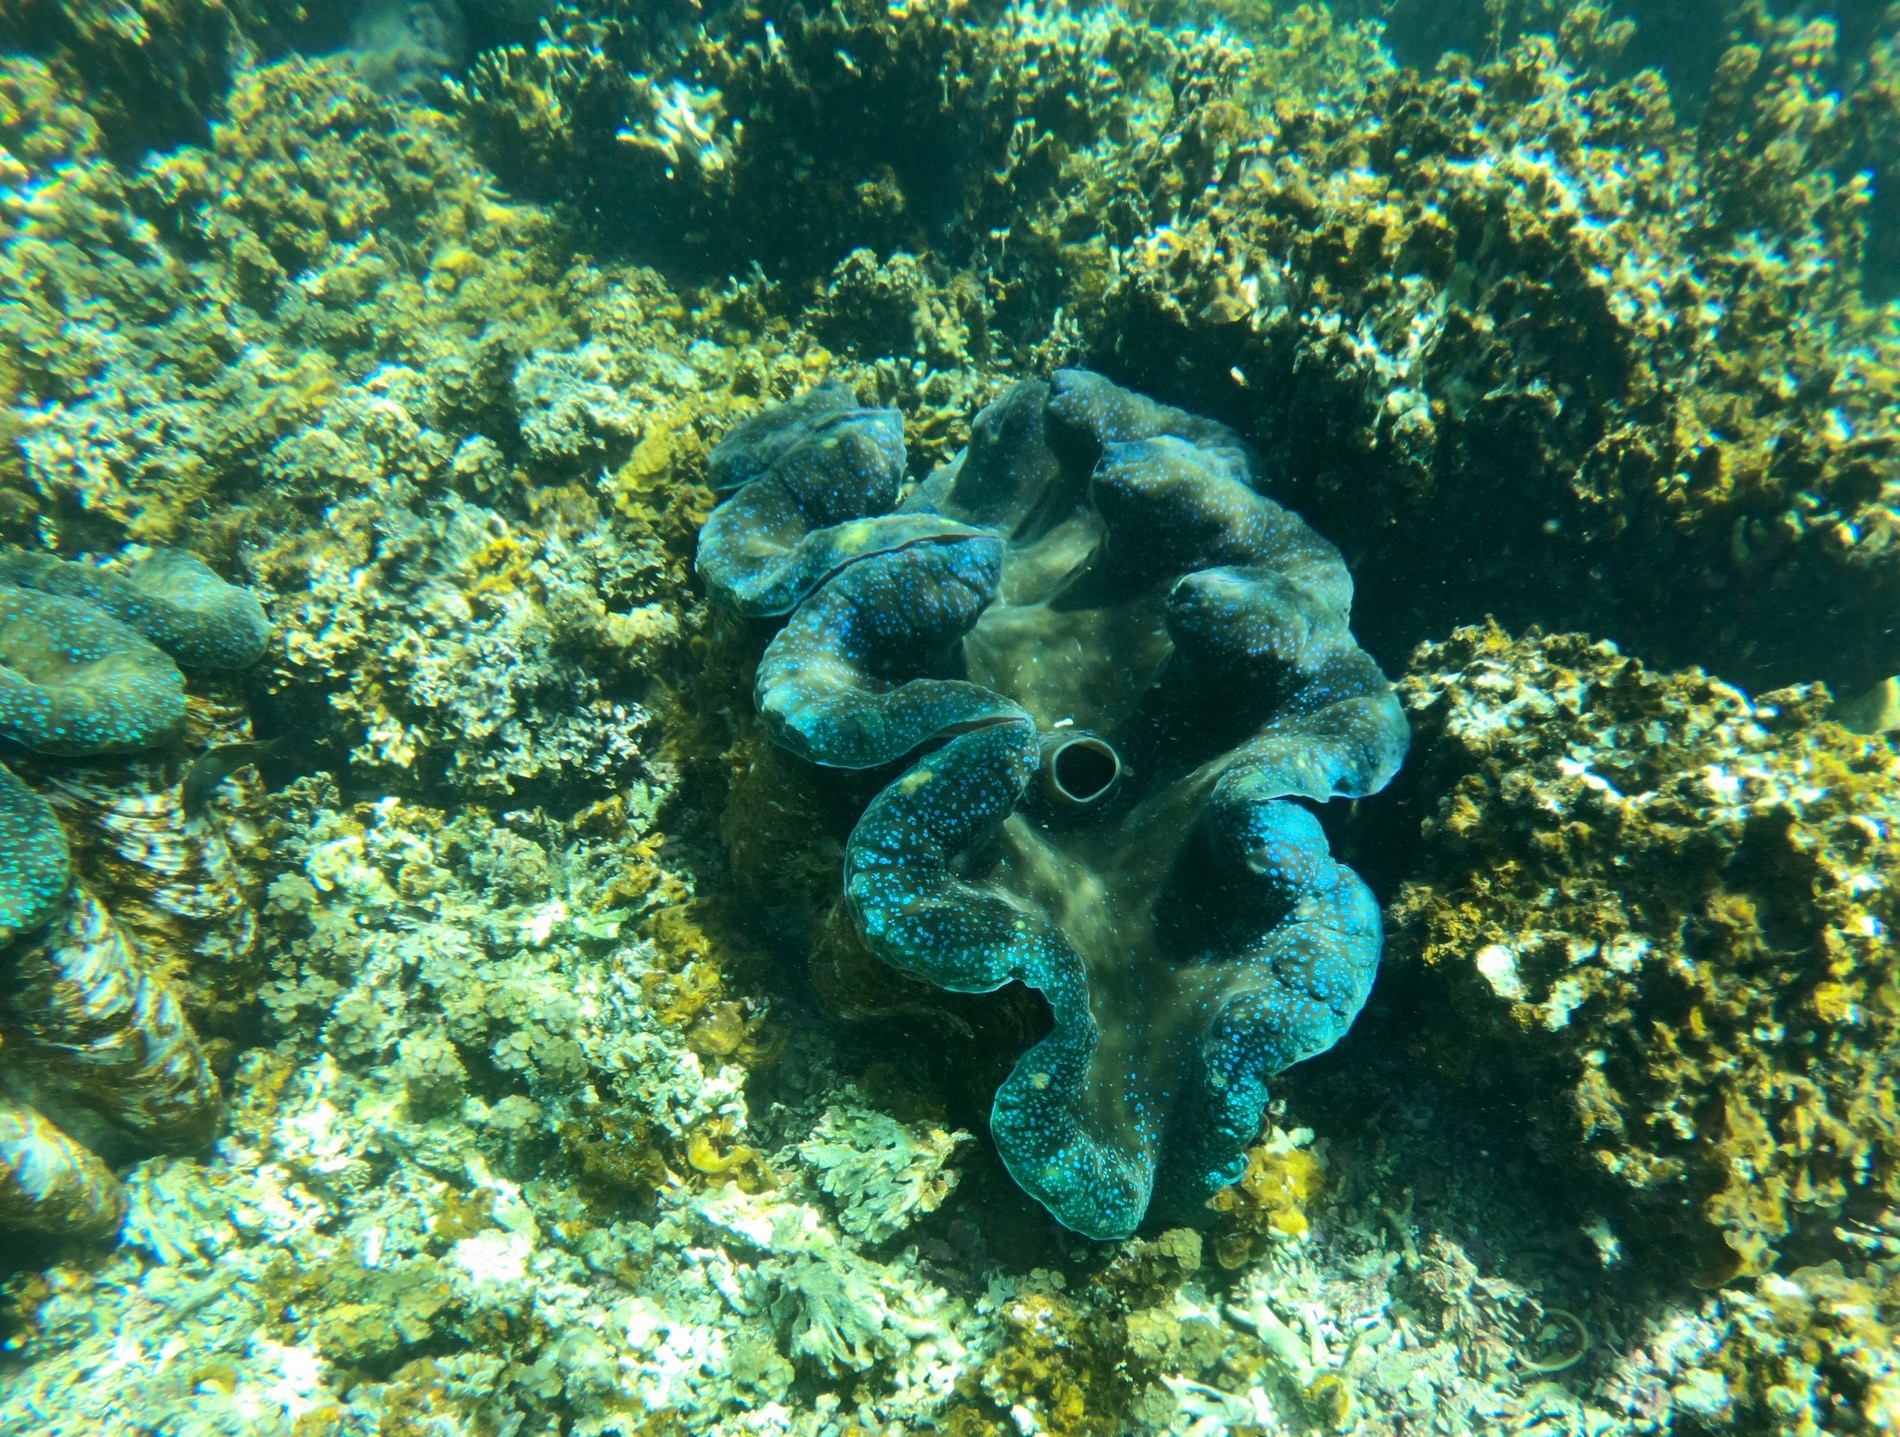 Giant clams in Samoa